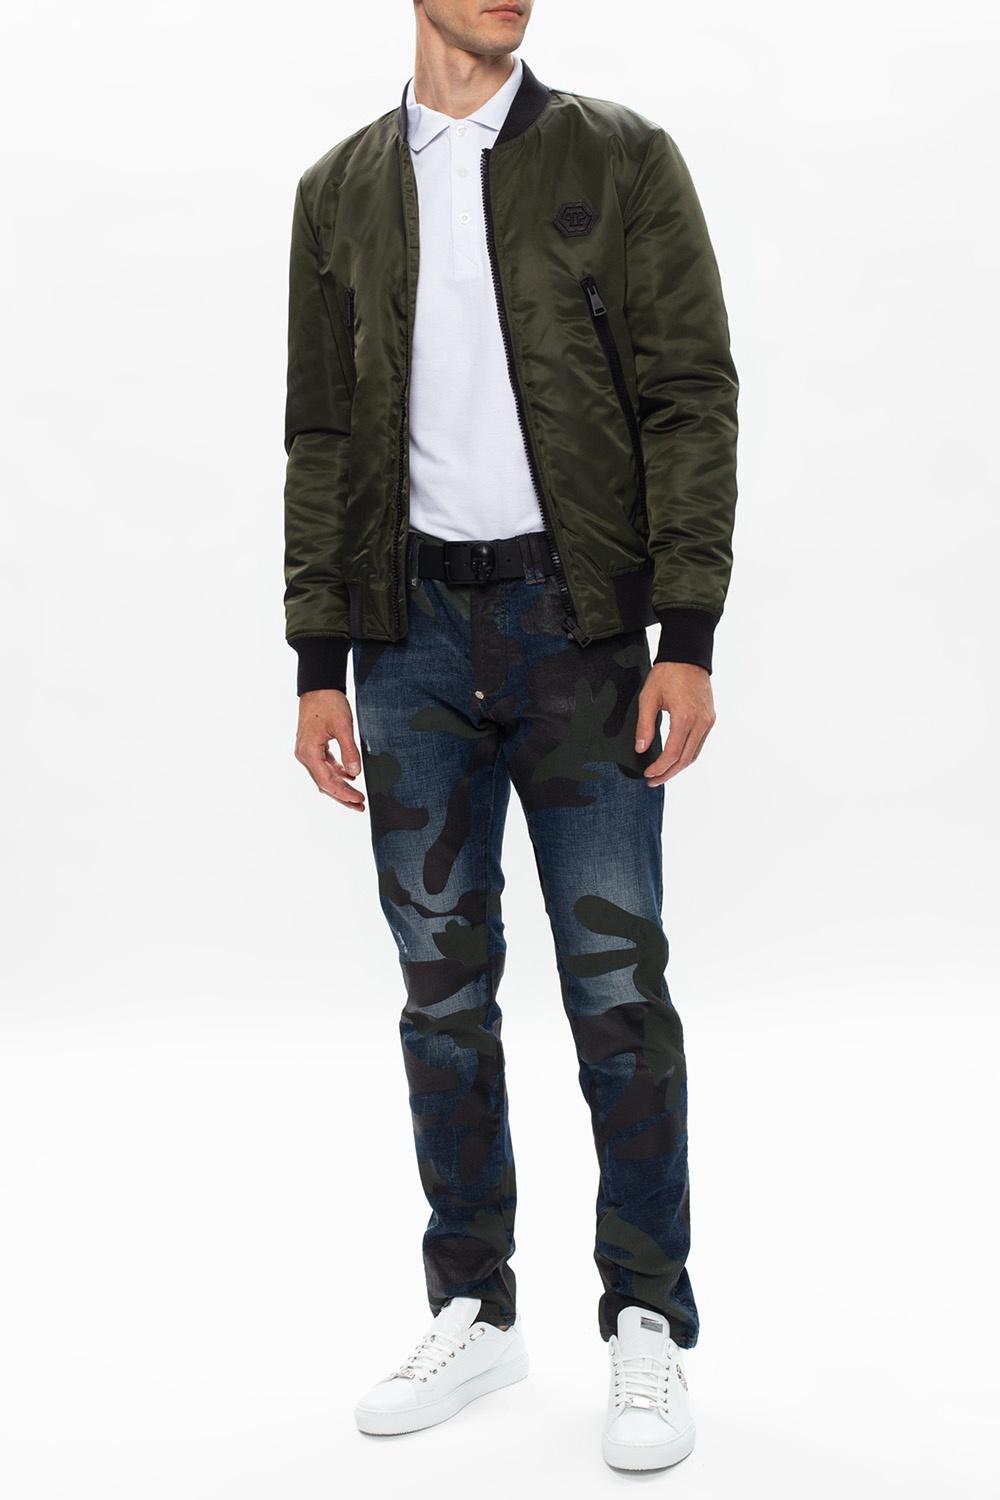 Philipp Plein Bomber jacket | Men's Clothing | Vitkac